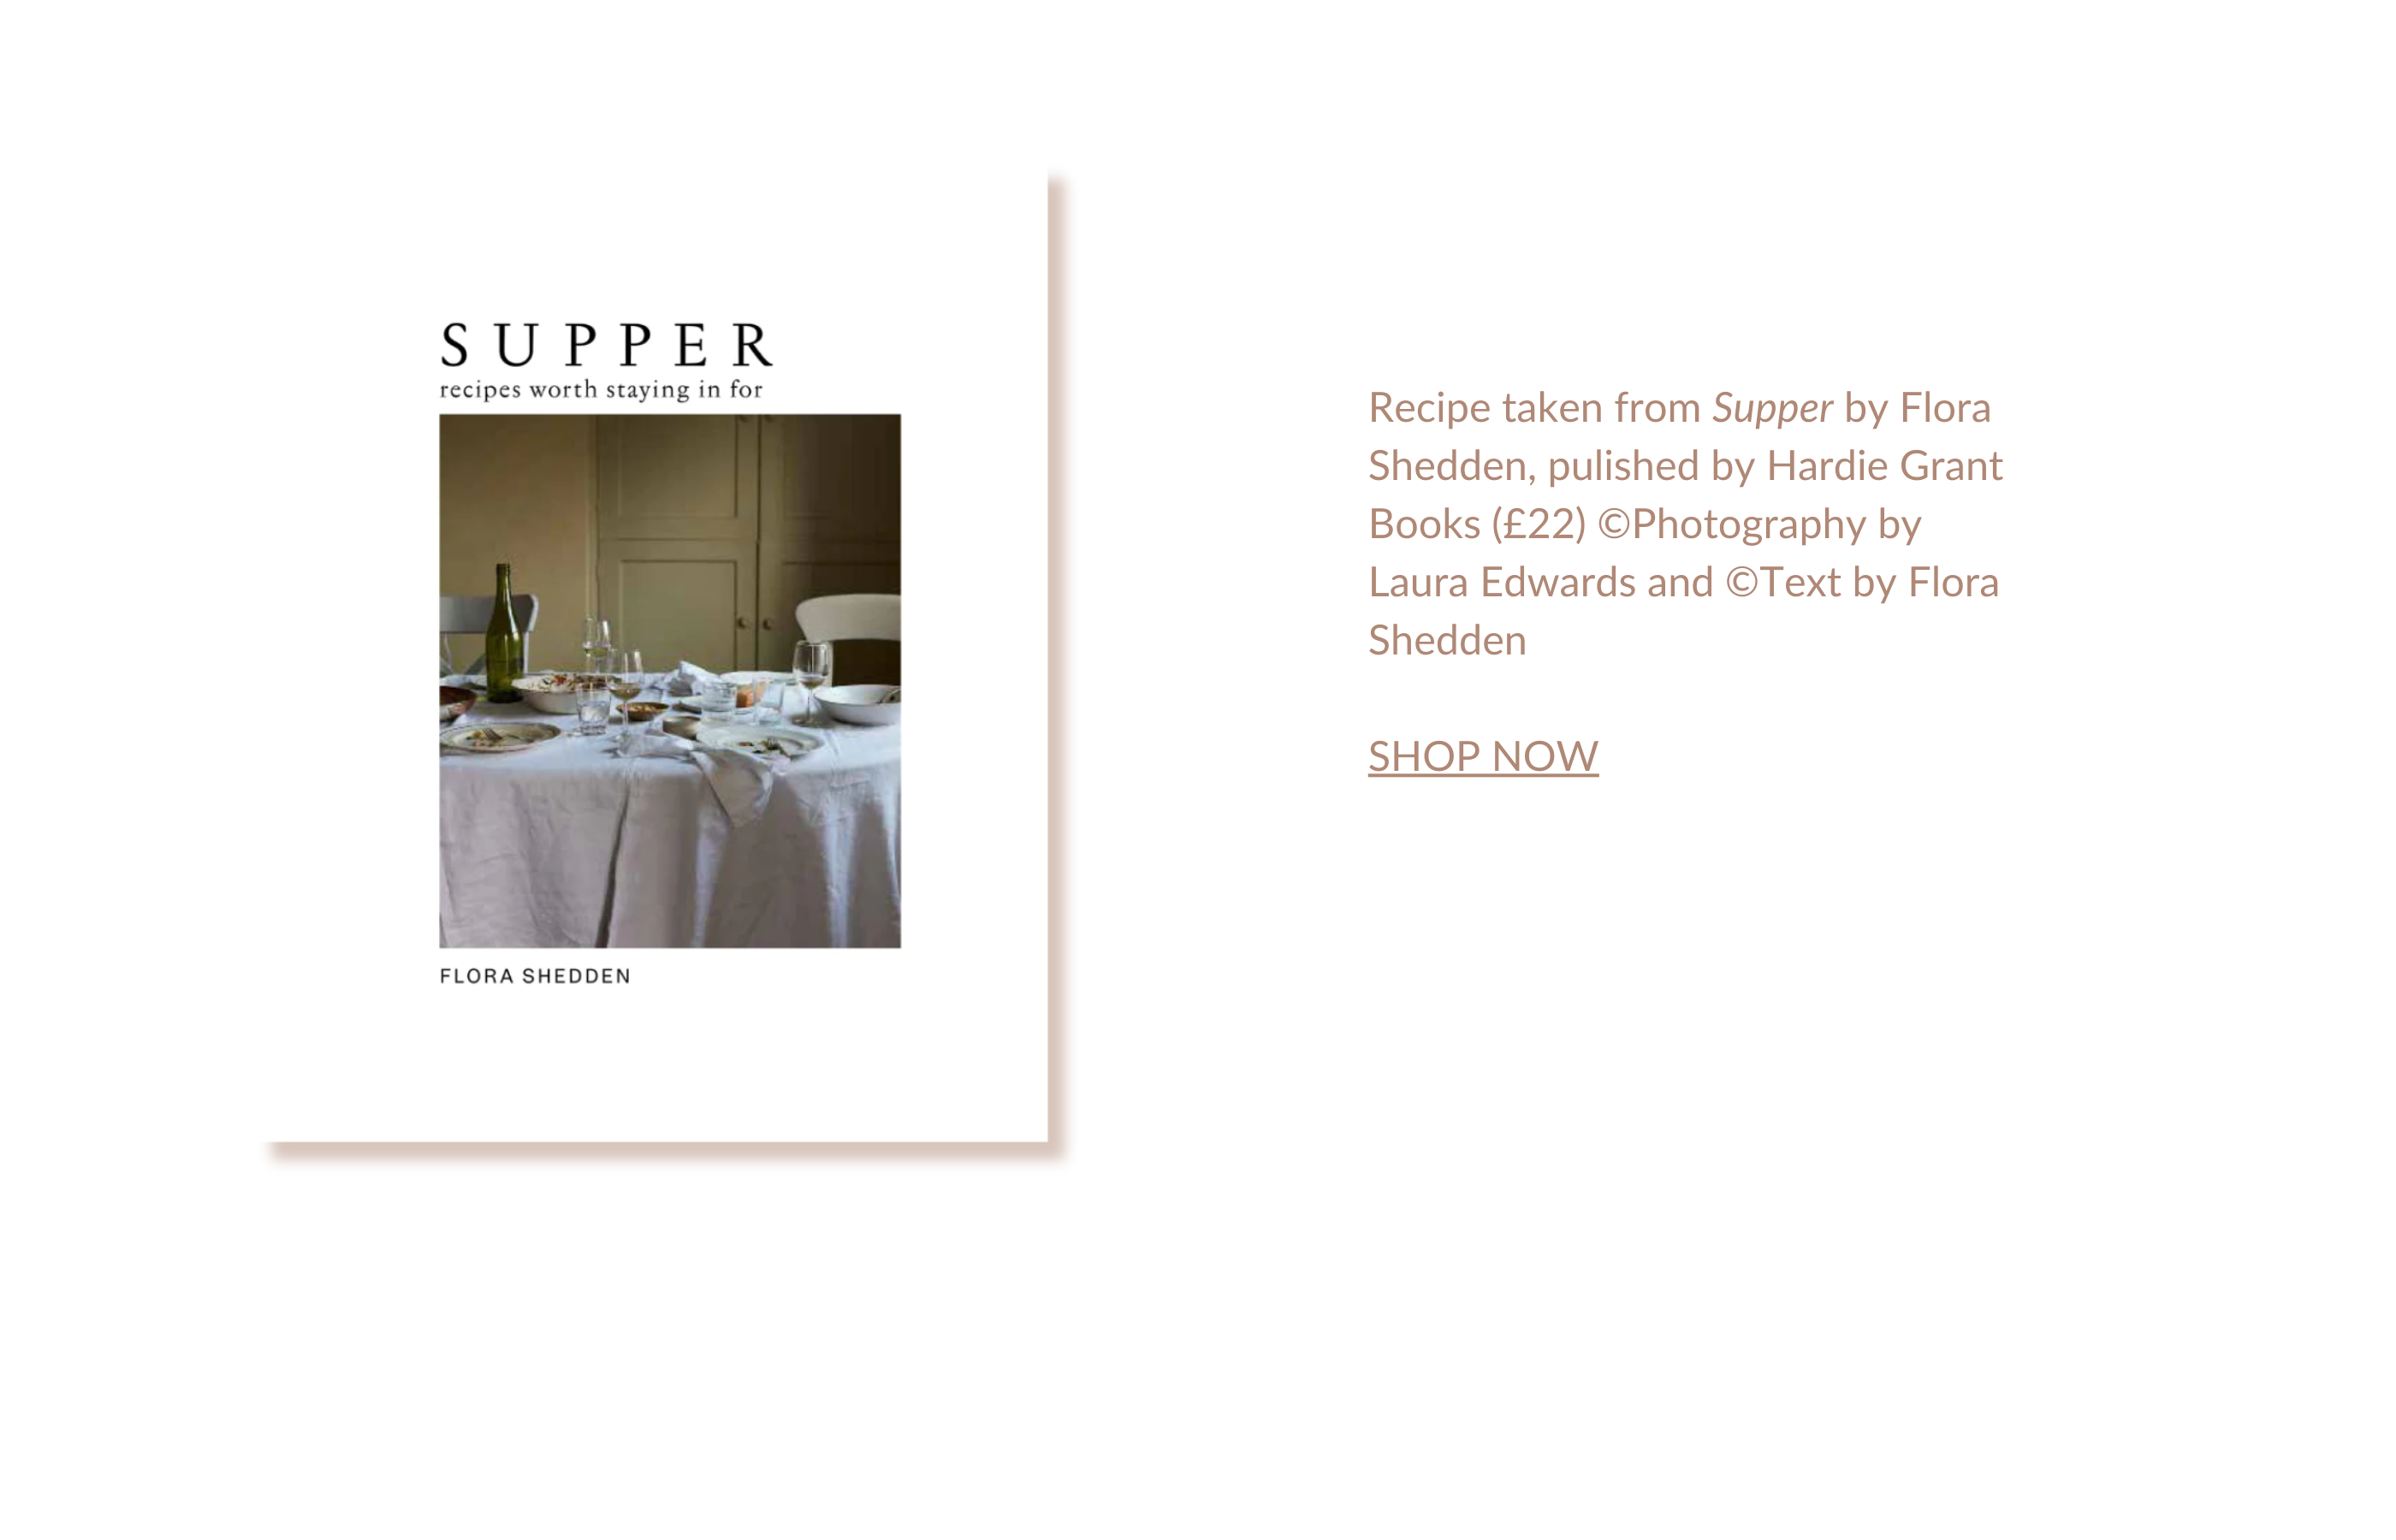 Buy Supper by Flora Shedden